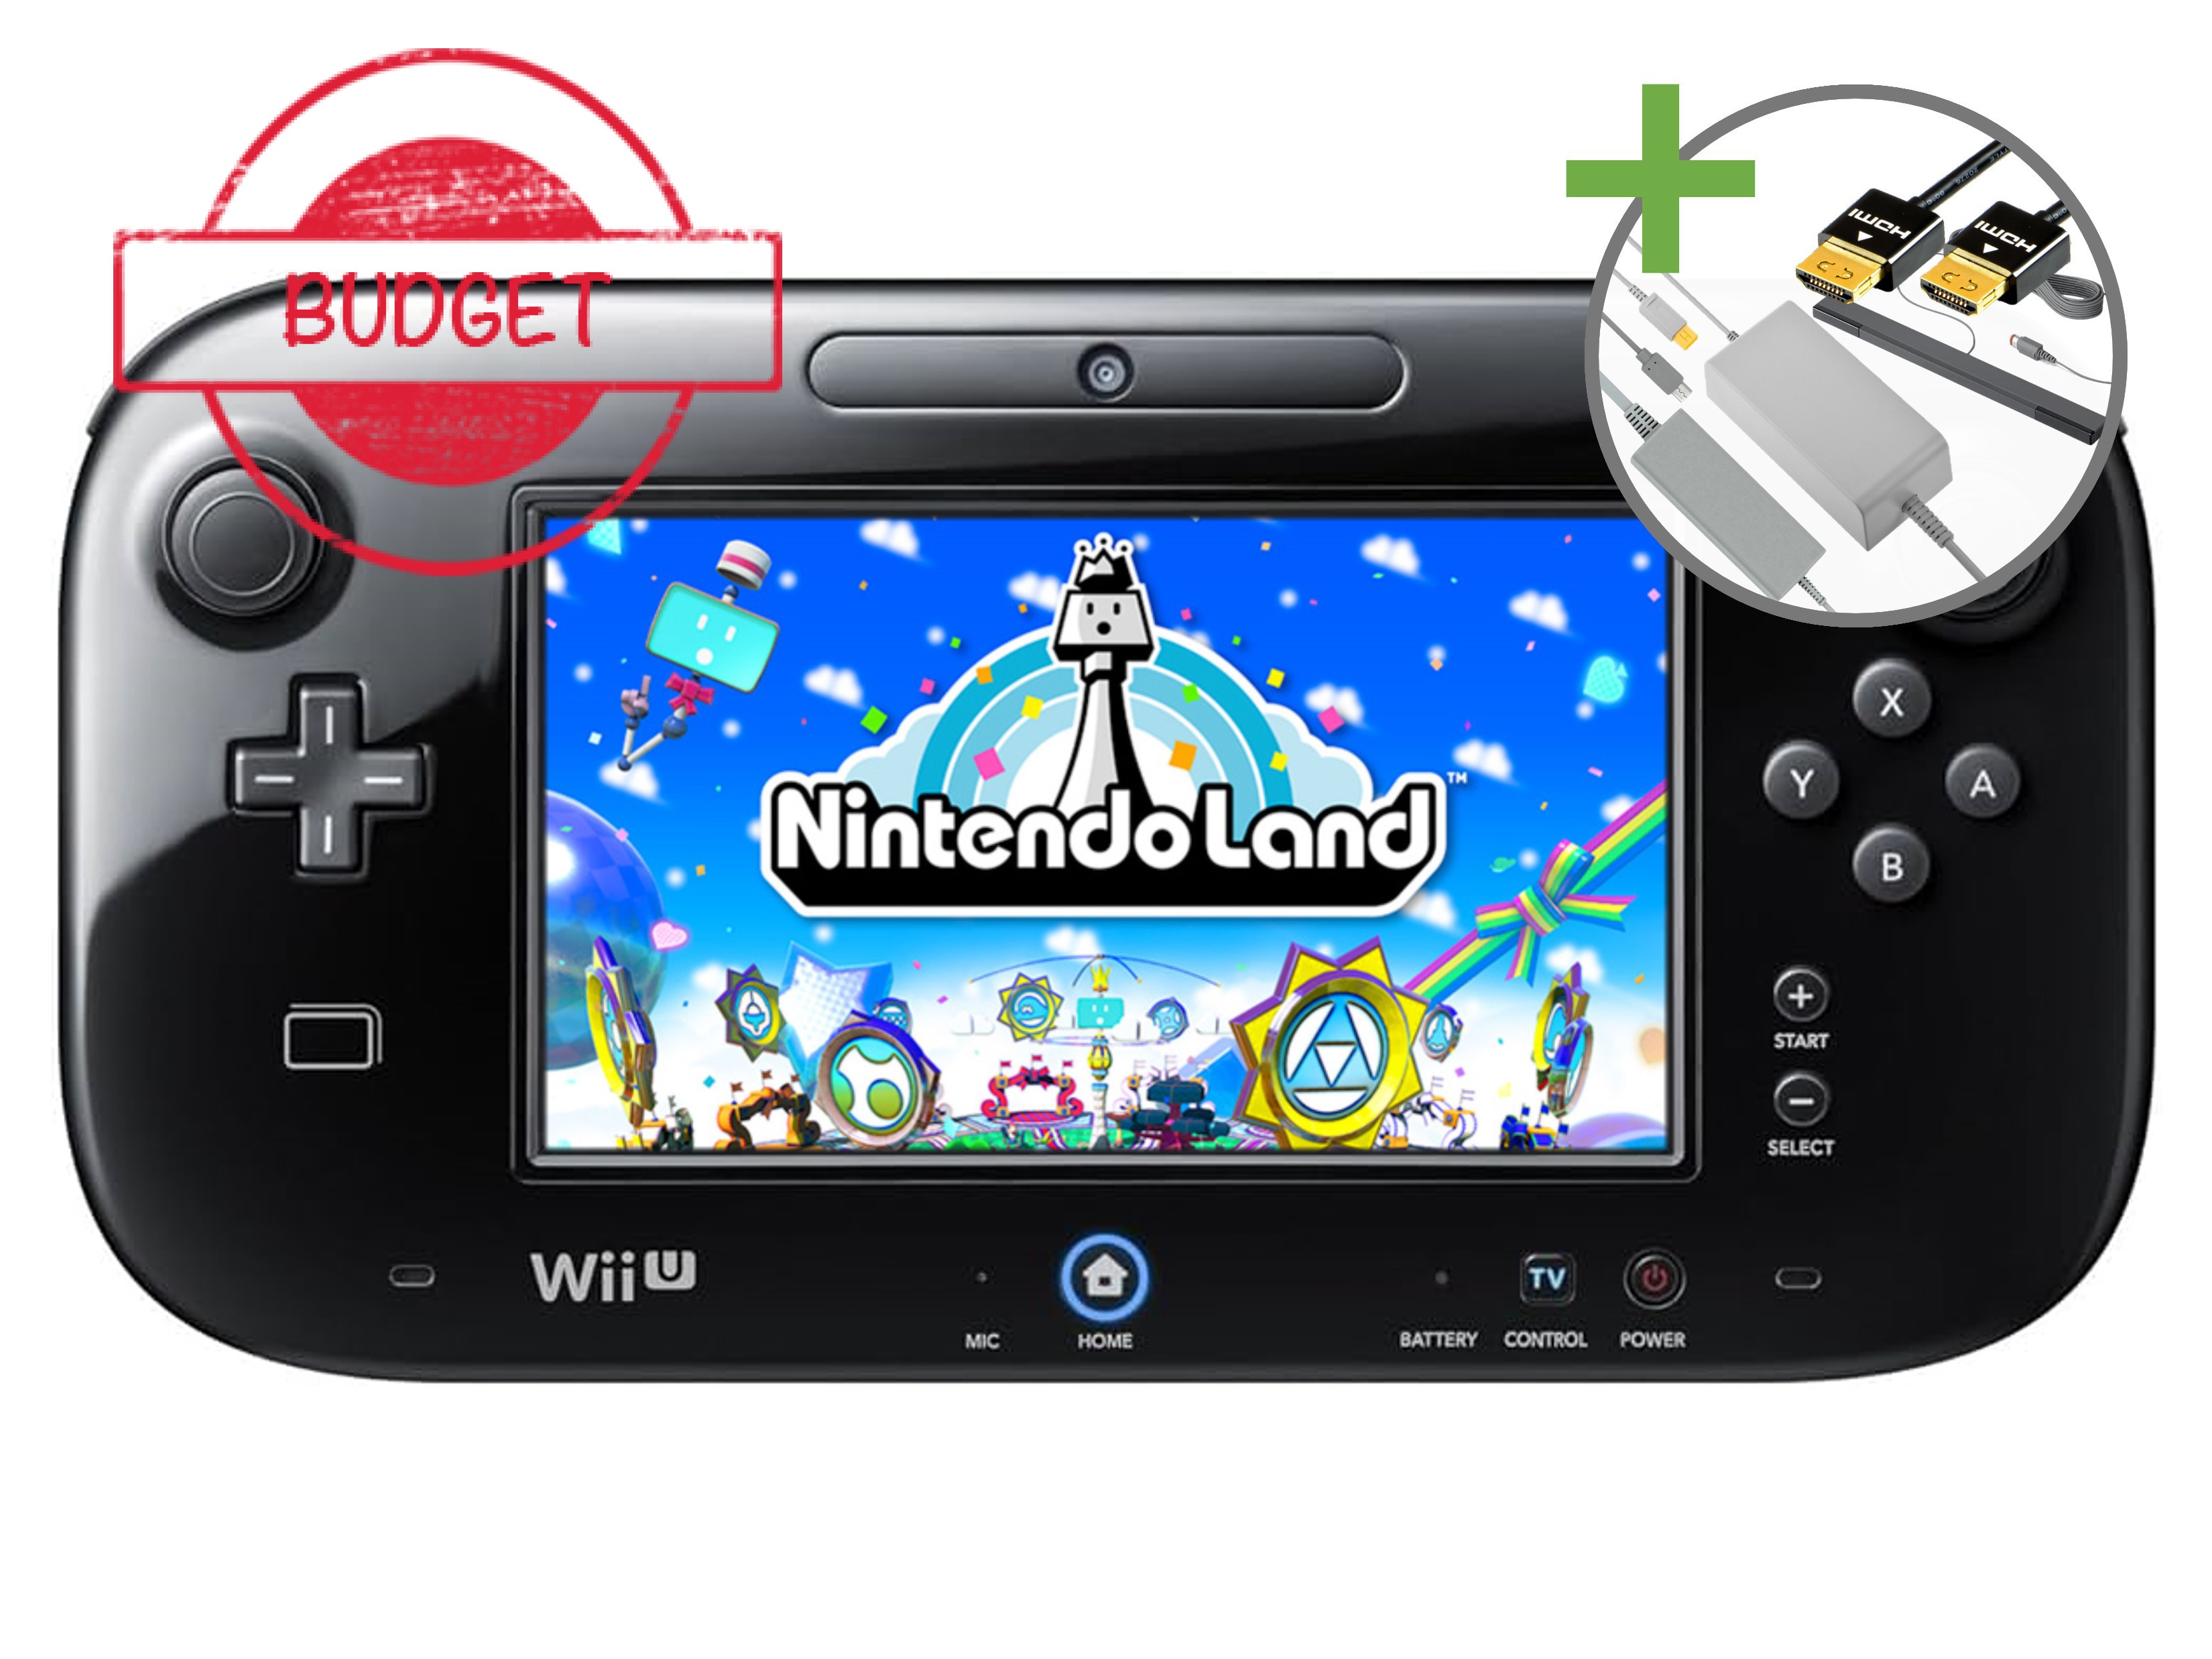 Nintendo Wii U Starter Pack - Deluxe Set Edition - Budget - Wii U Hardware - 2